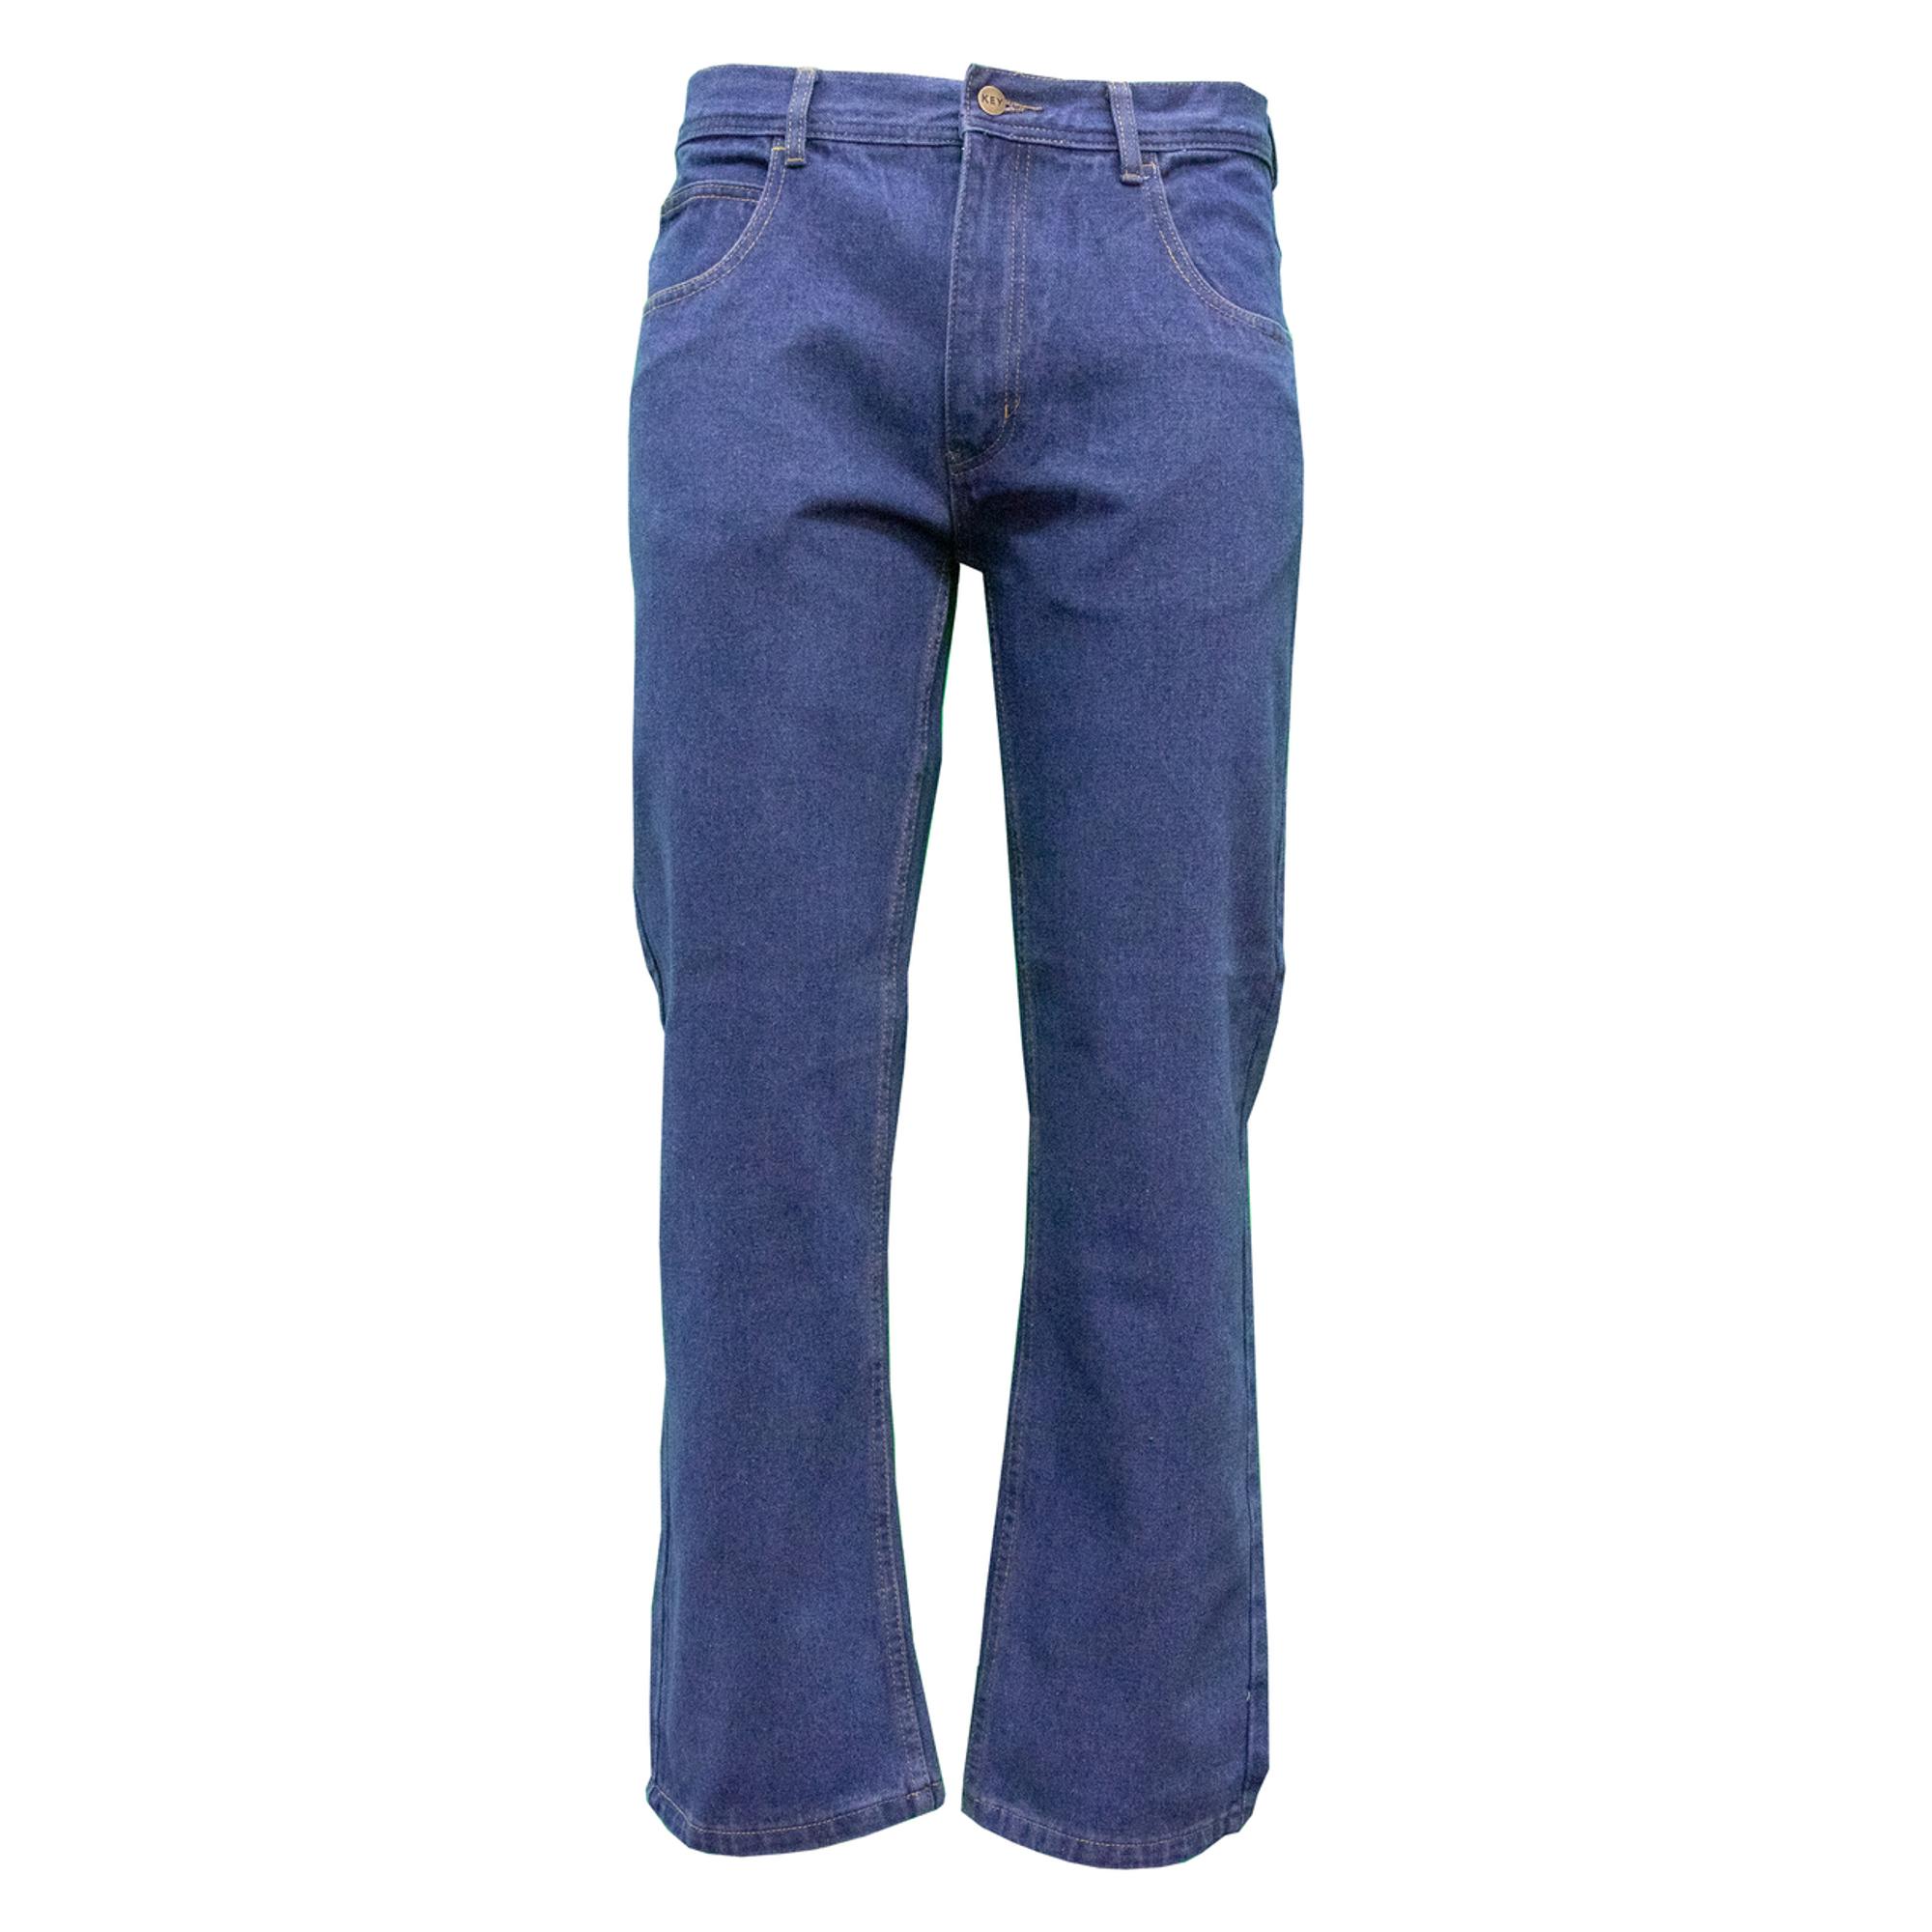 Key Performance Comfort 5- Pocket Jean